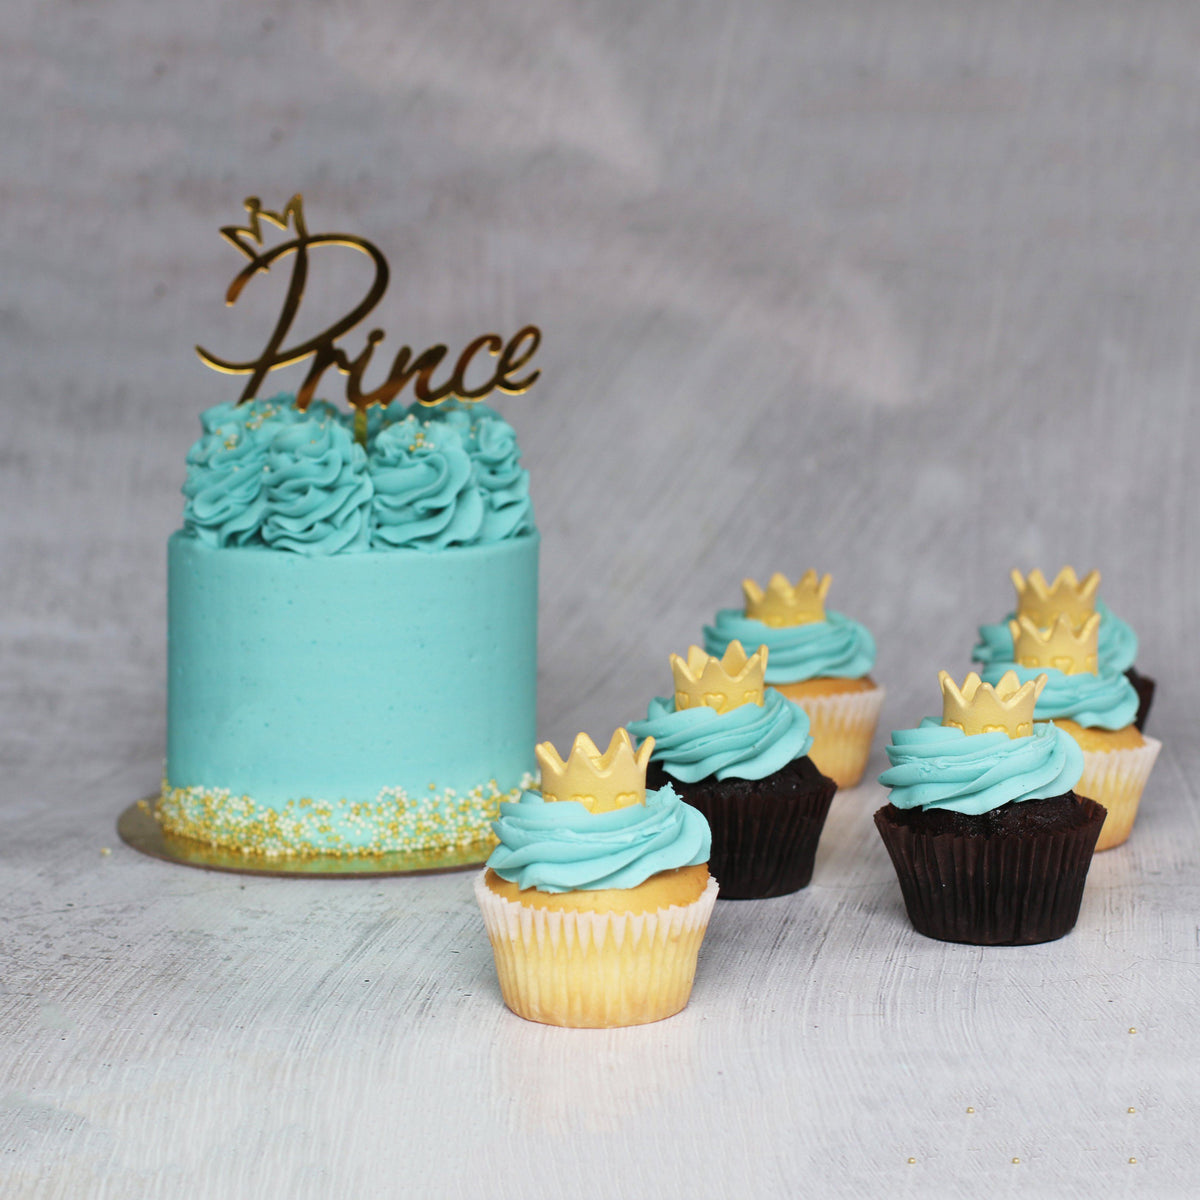 Prince Regular Cupcake size Box Cupcakes The Cupcake Queens 